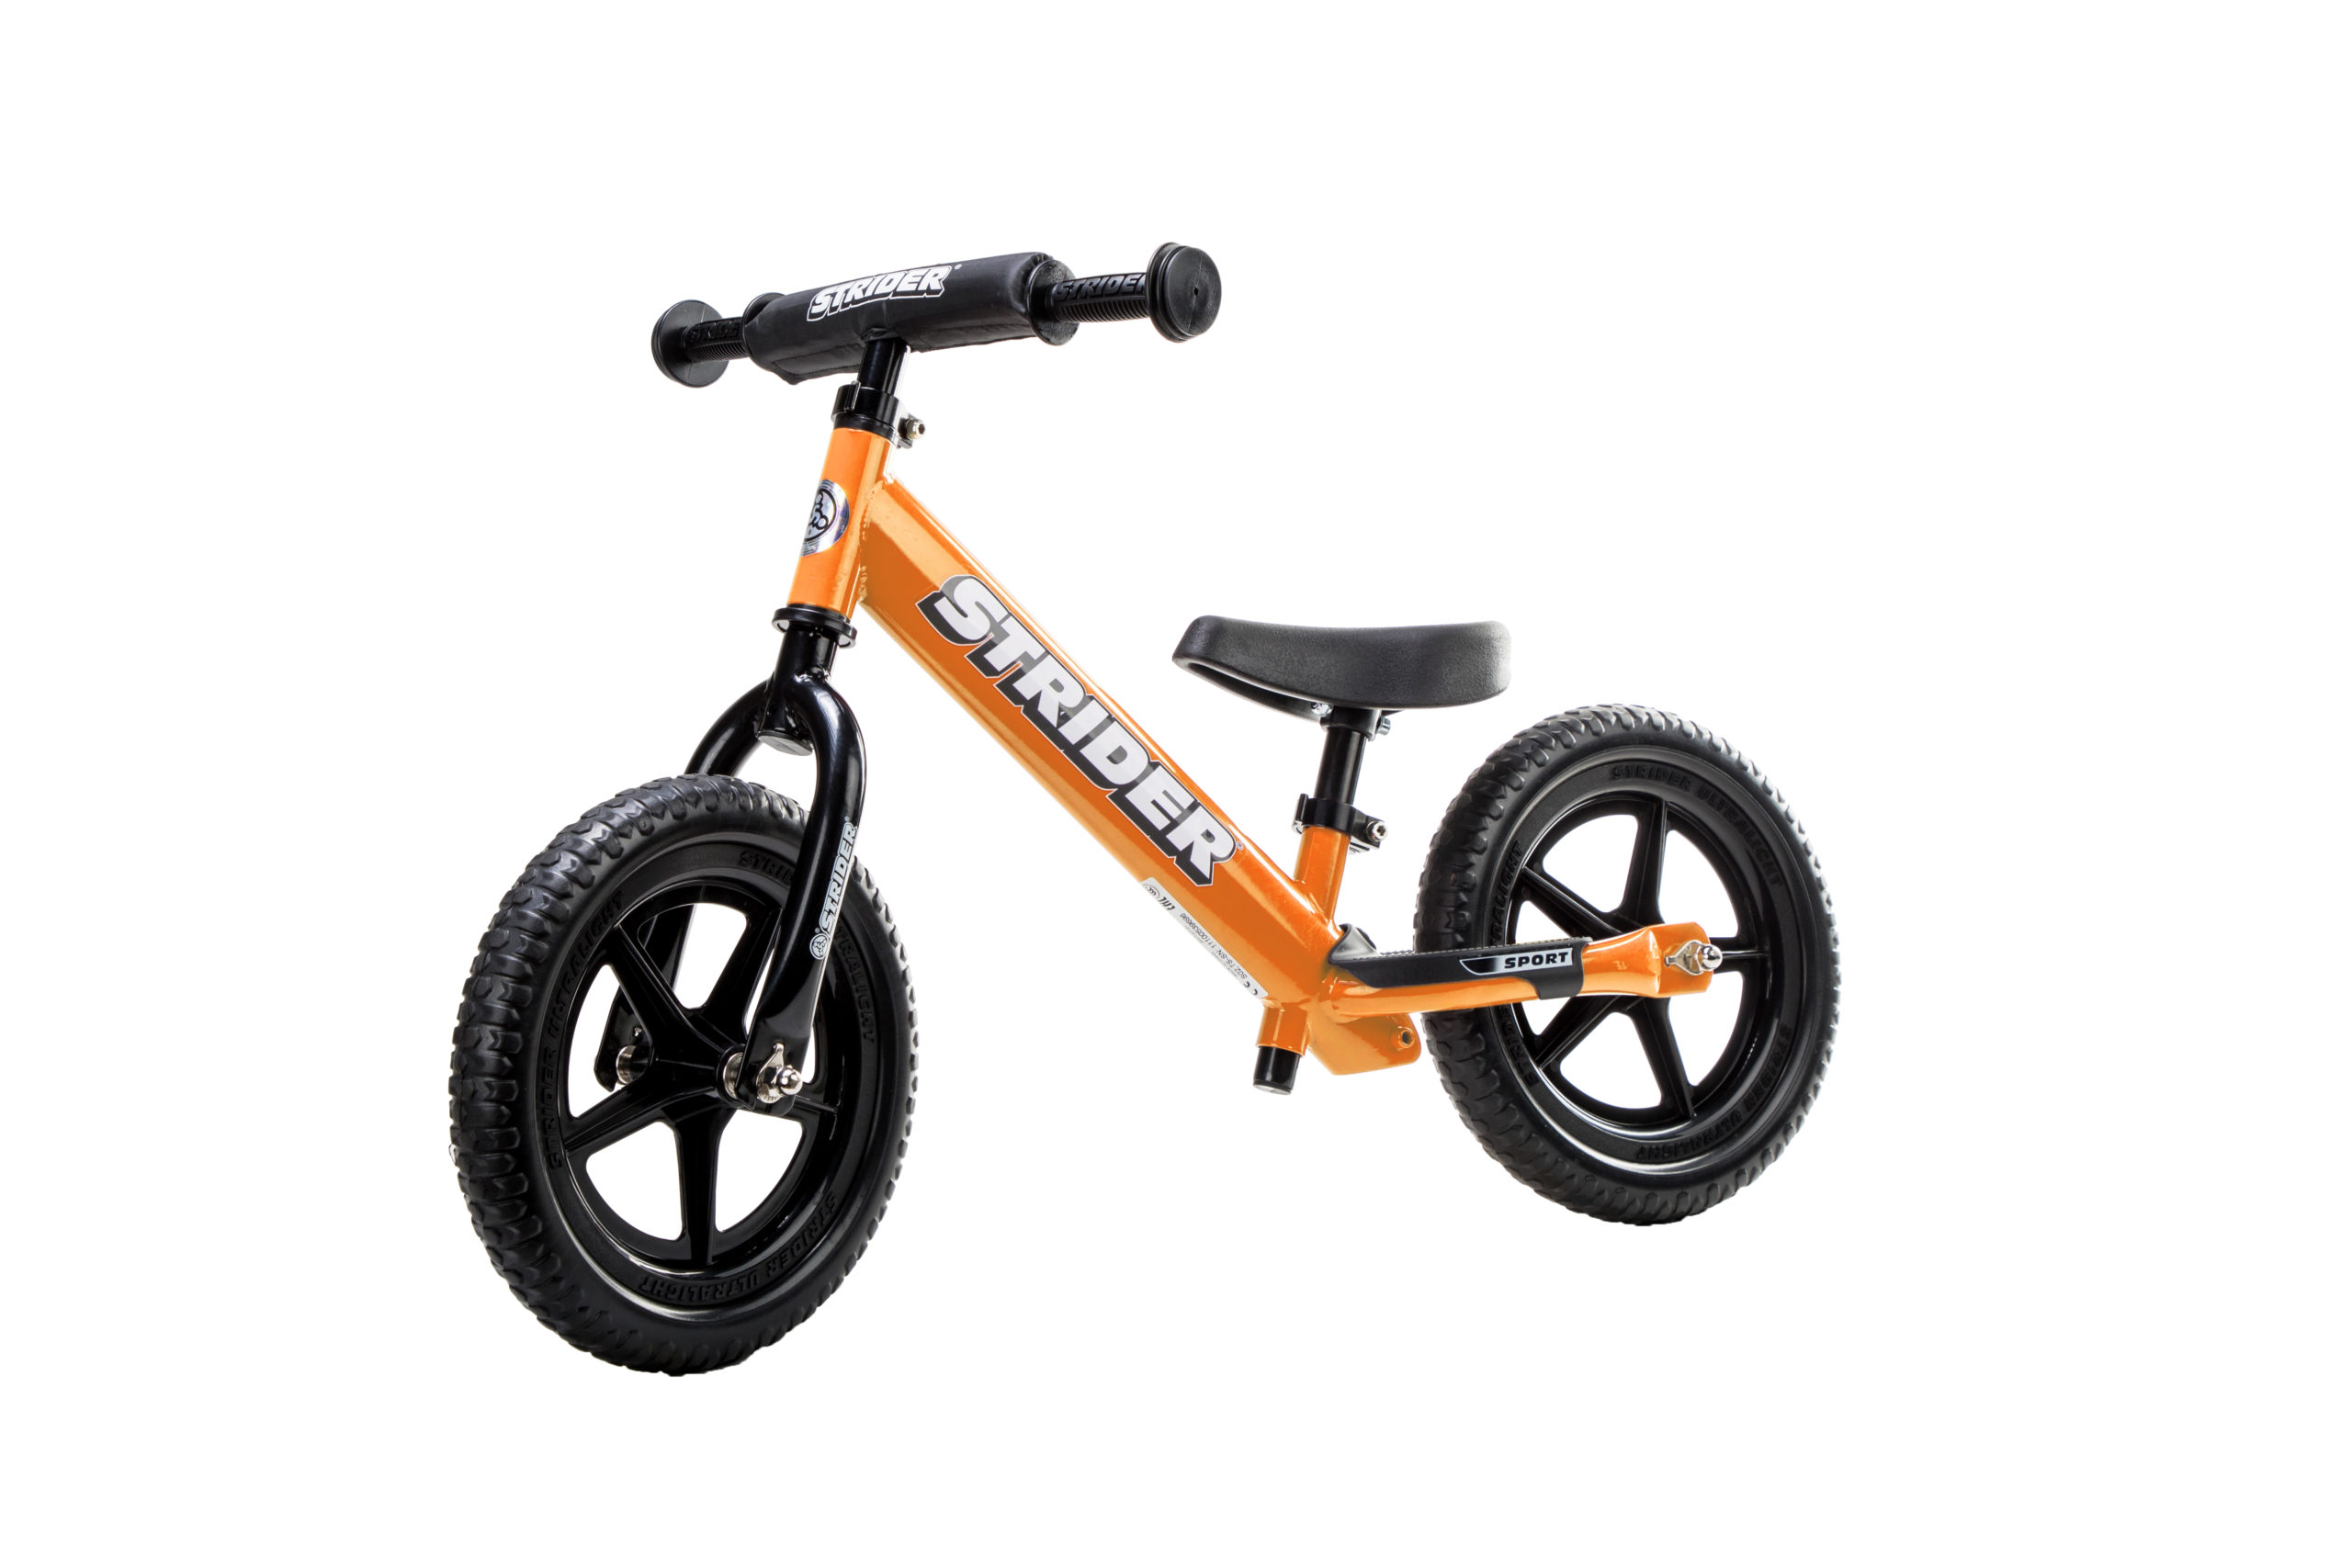 strider bike with pedals